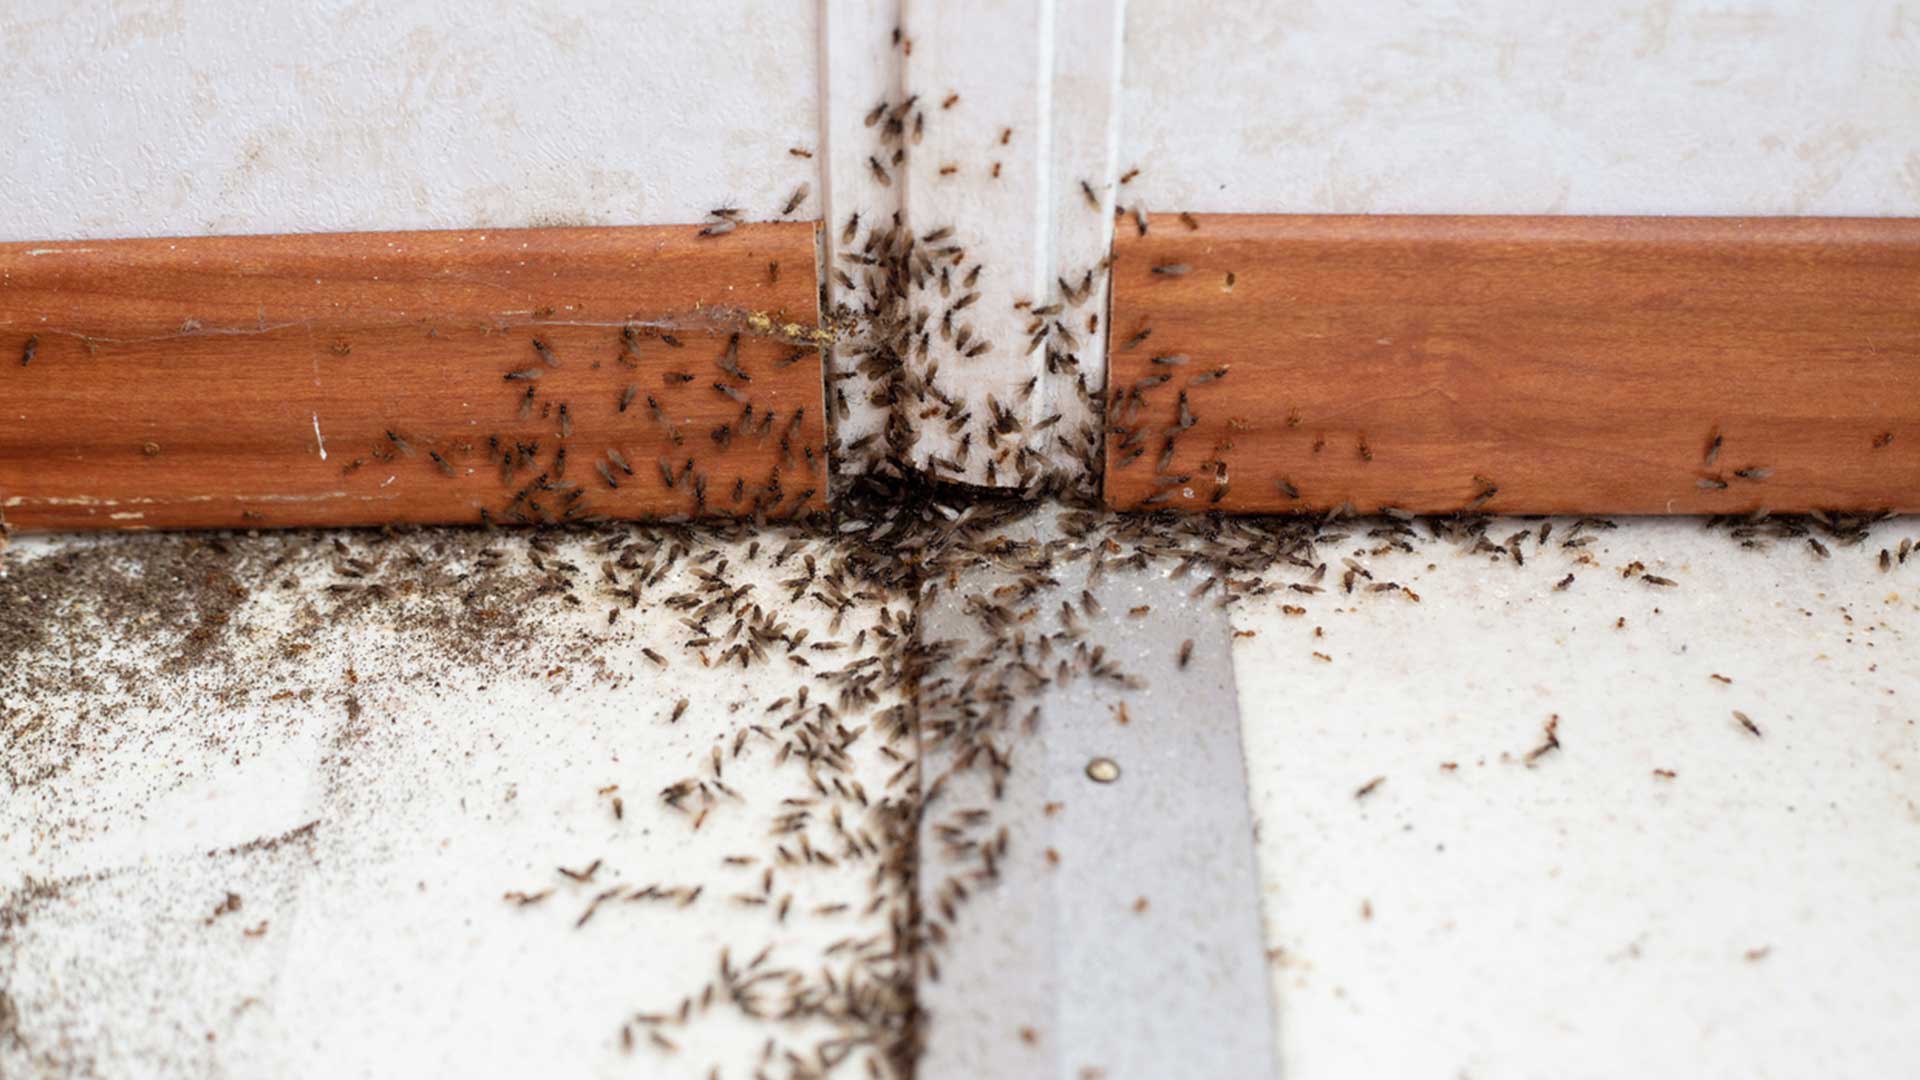 Flying ants infesting baseboards